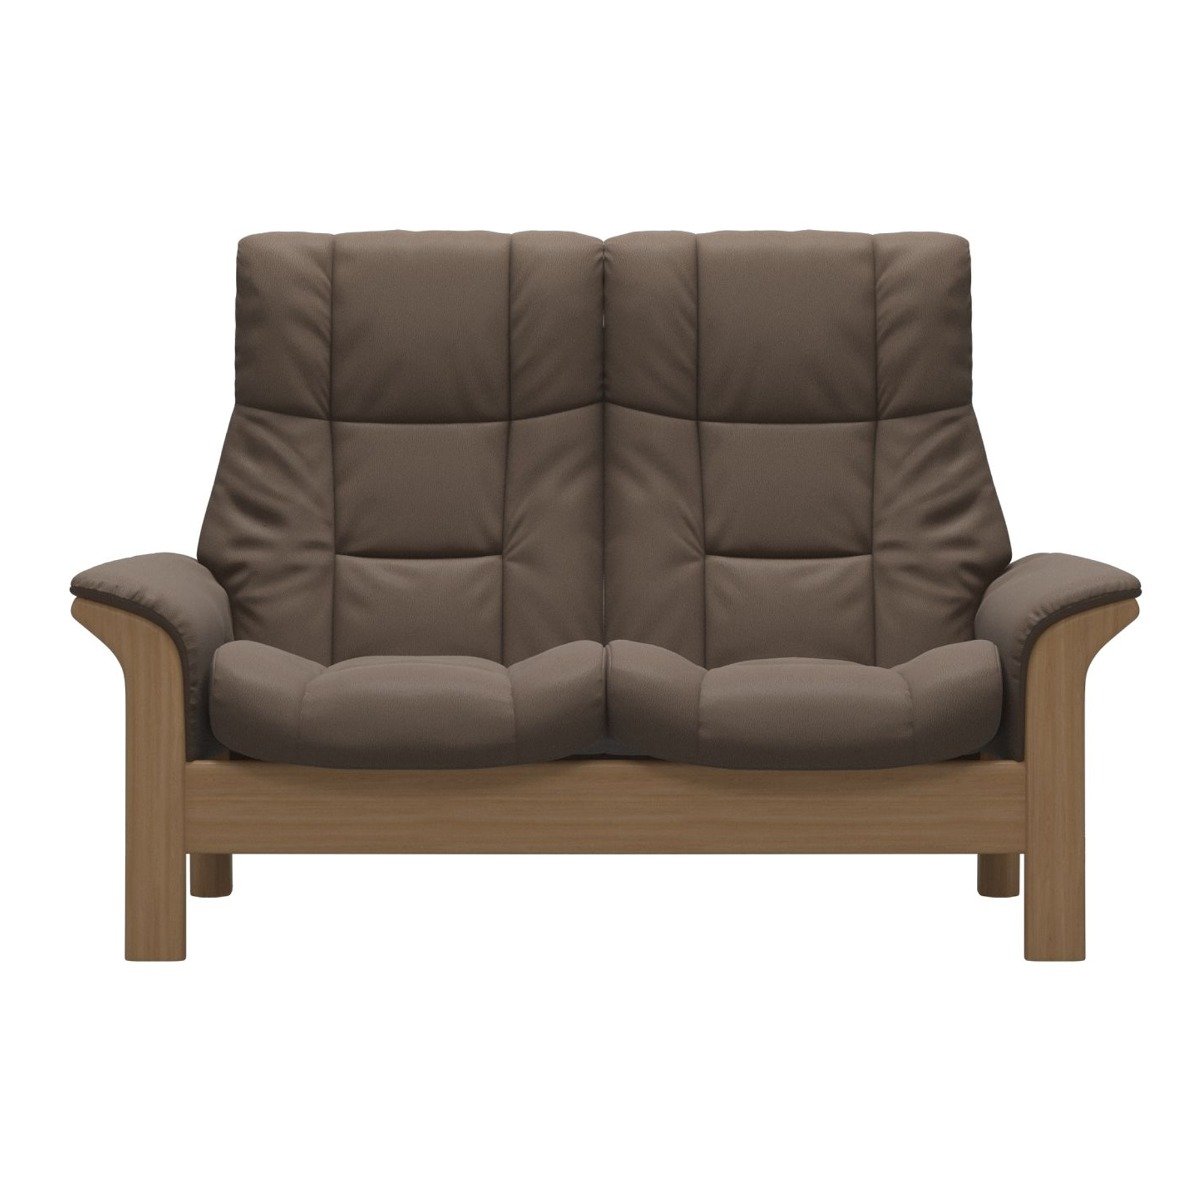 Stressless Windsor High Back 2 Seater Recliner Sofa, Brown Leather | Barker & Stonehouse